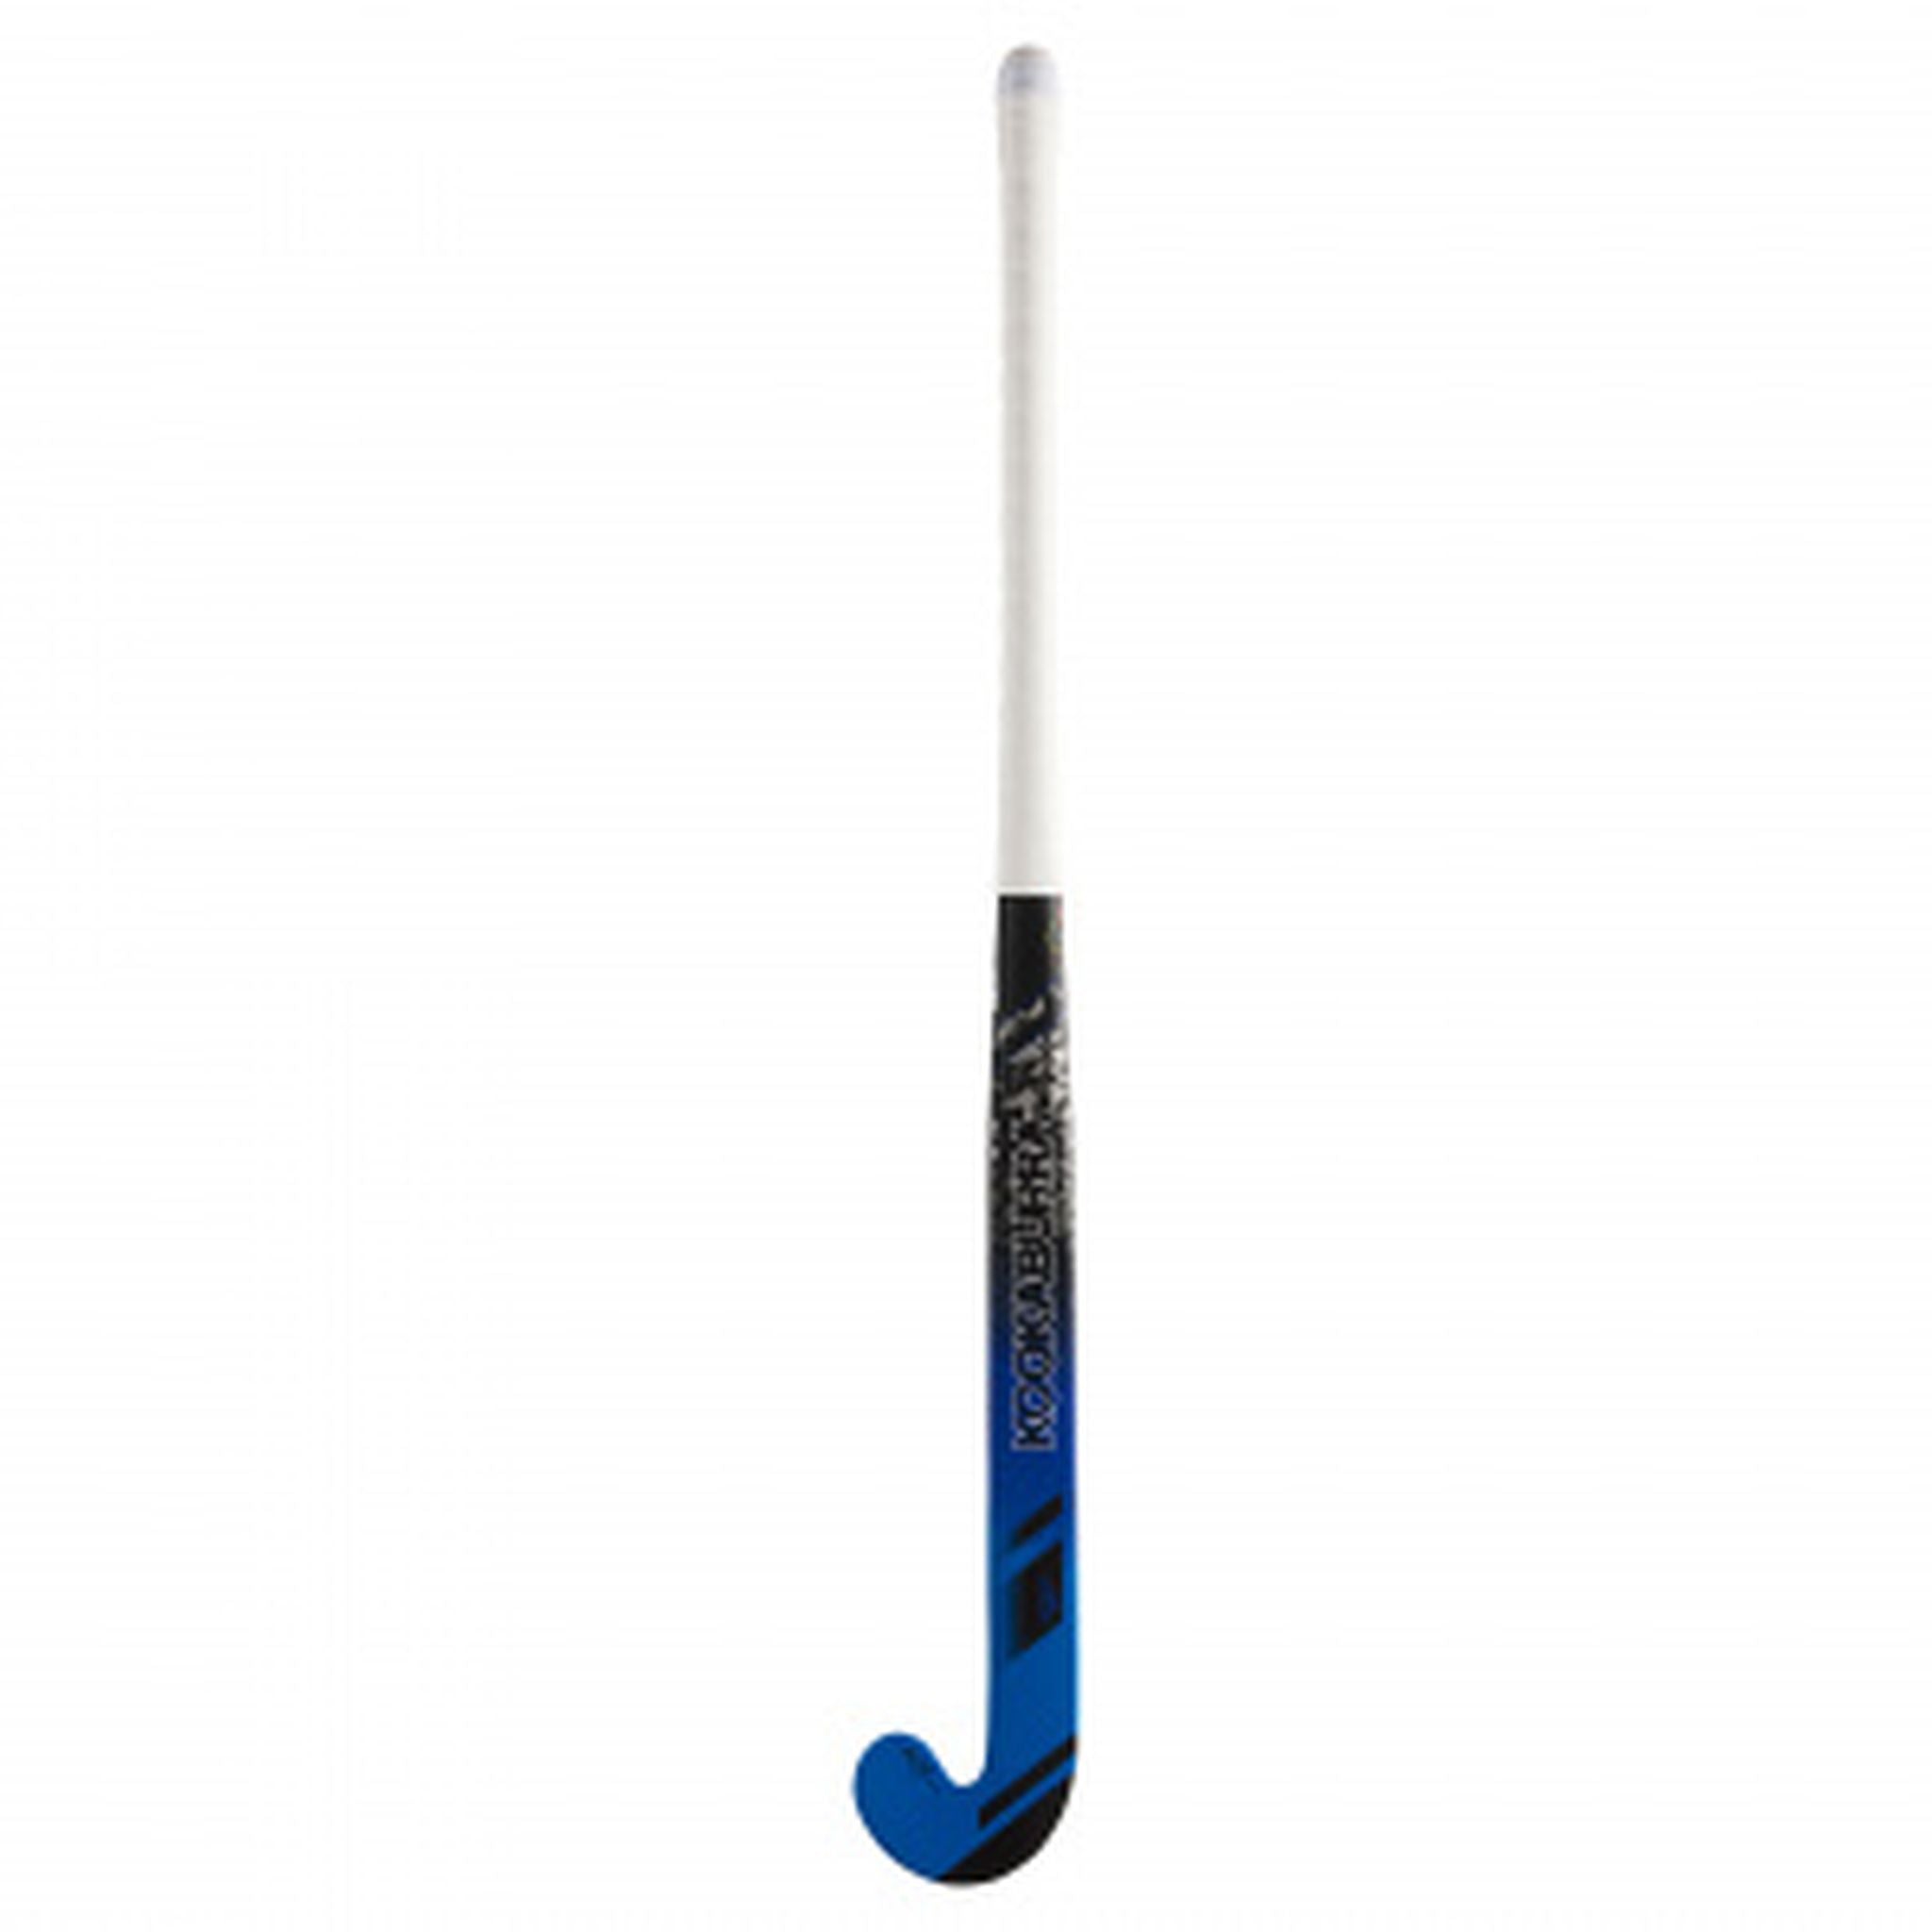 Kookaburra Origin 650 LBOW Hockey Stick